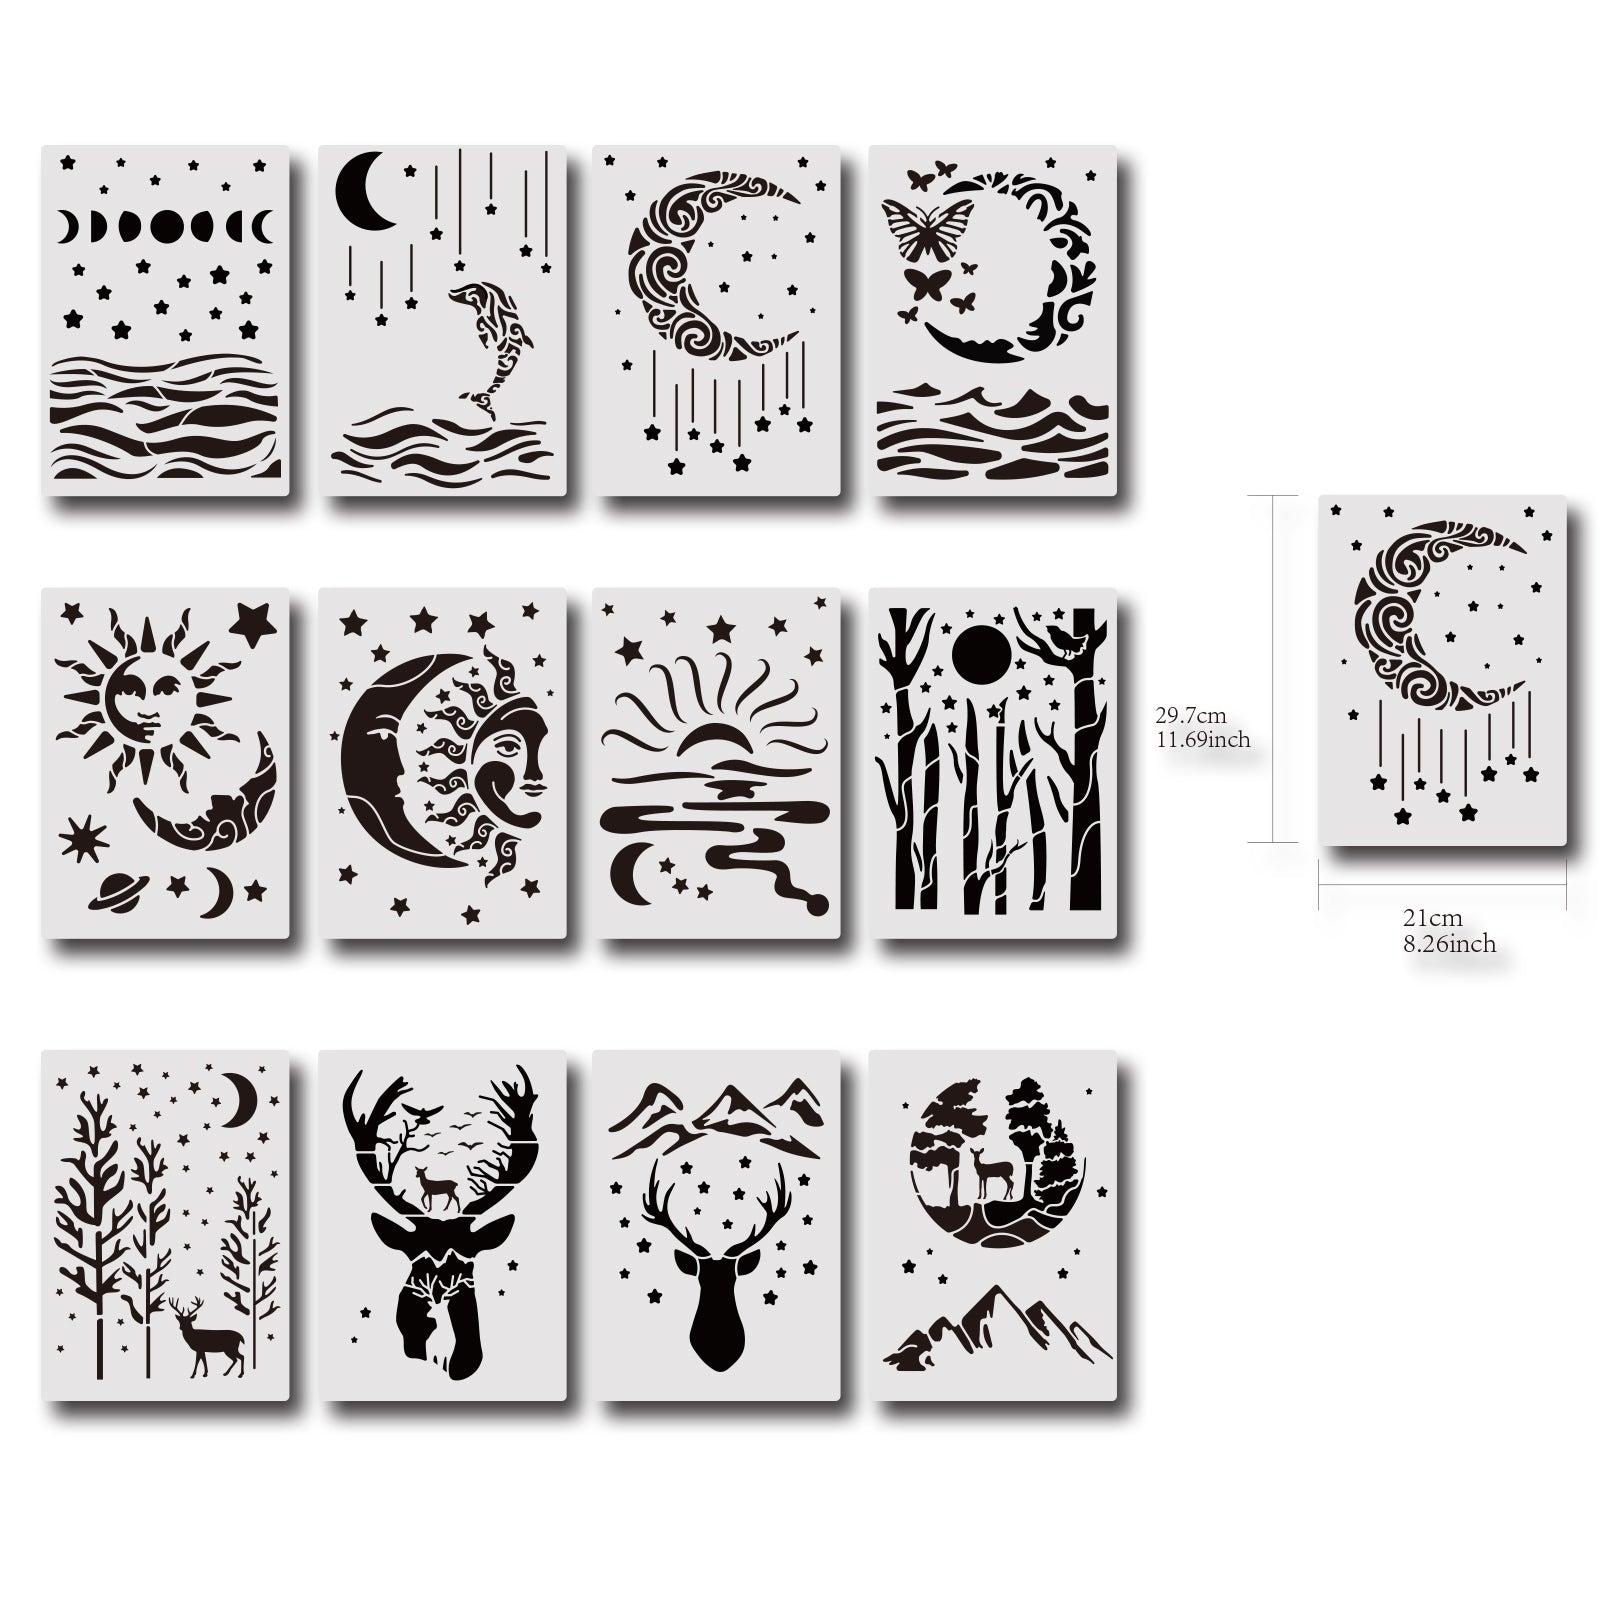 Globleland Plastic Drawing Painting Stencils Templates Sets, Mixed Patterns, 21x29.7cm, 12pcs/set